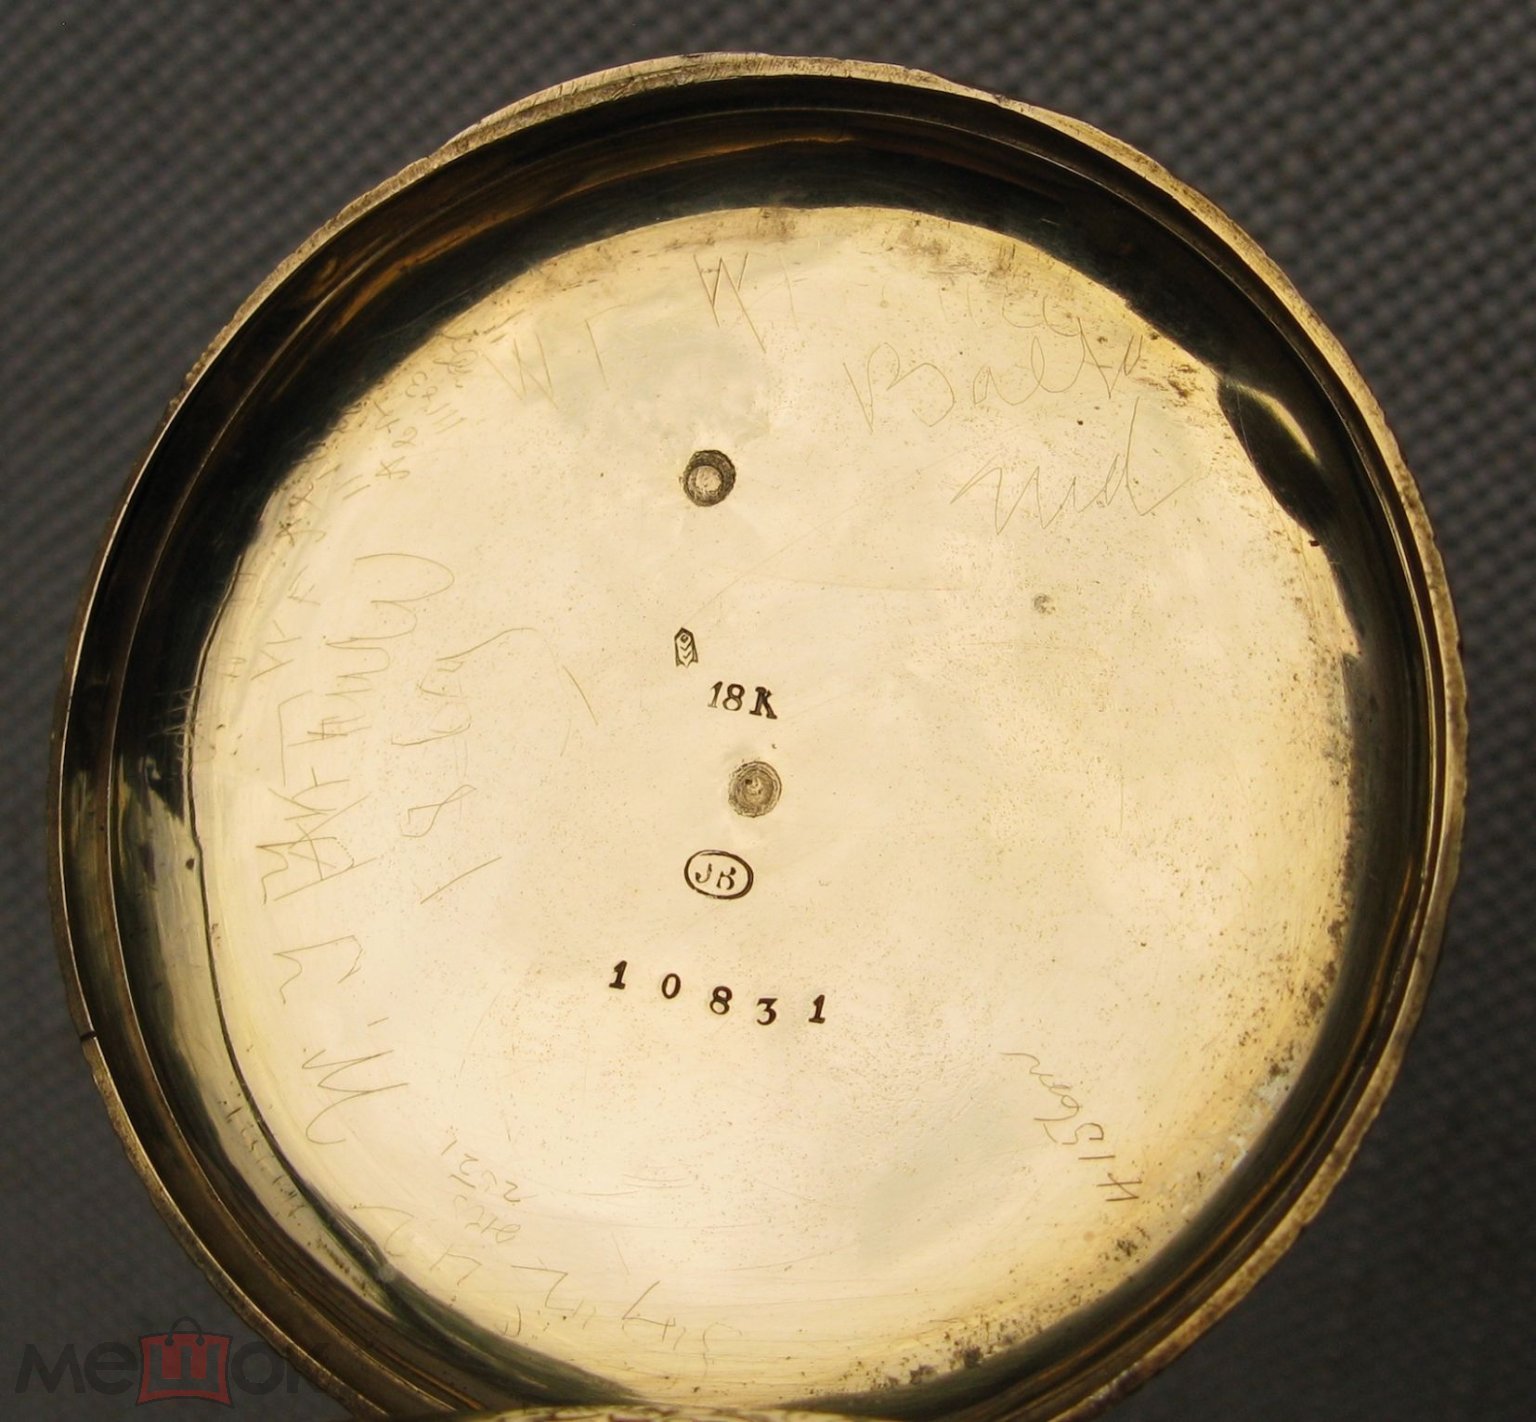 Карманные часы, French Morris & Co. , Англия, Лондон, Золото 750 проба, 46мм, 64.9 грамма. 1830-40е